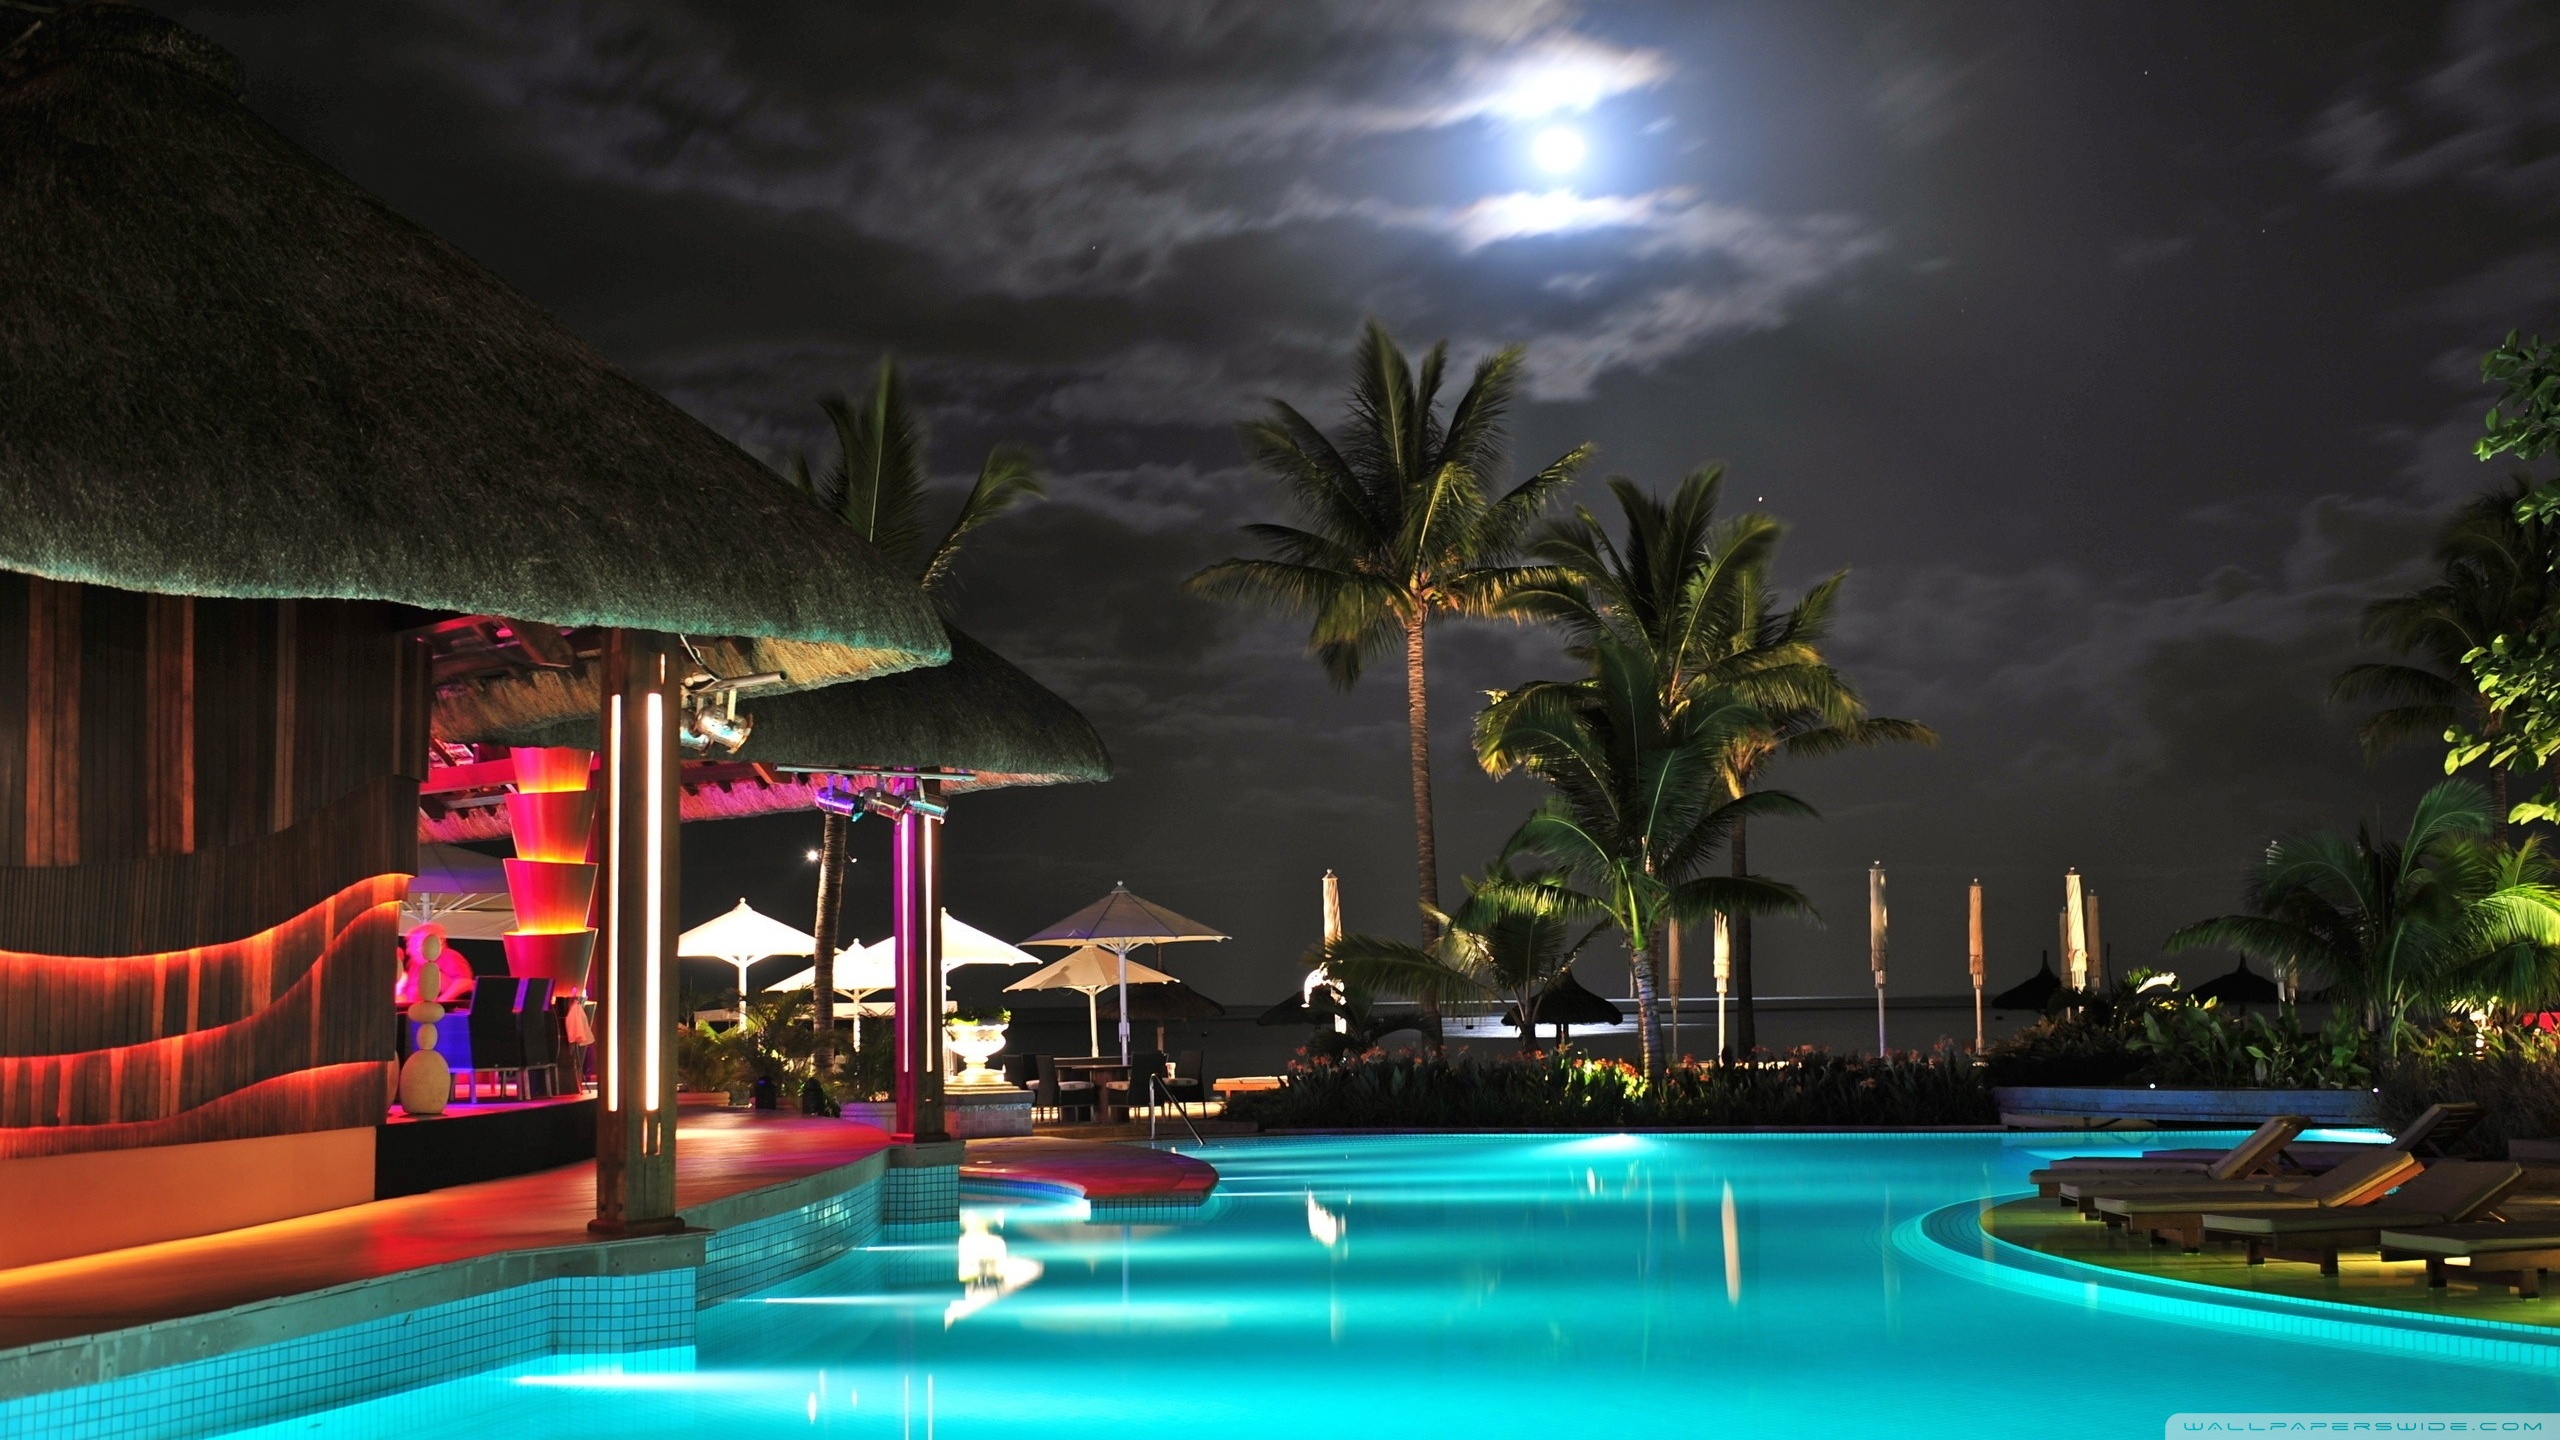 Luxury Pool At Night - HD Wallpaper 